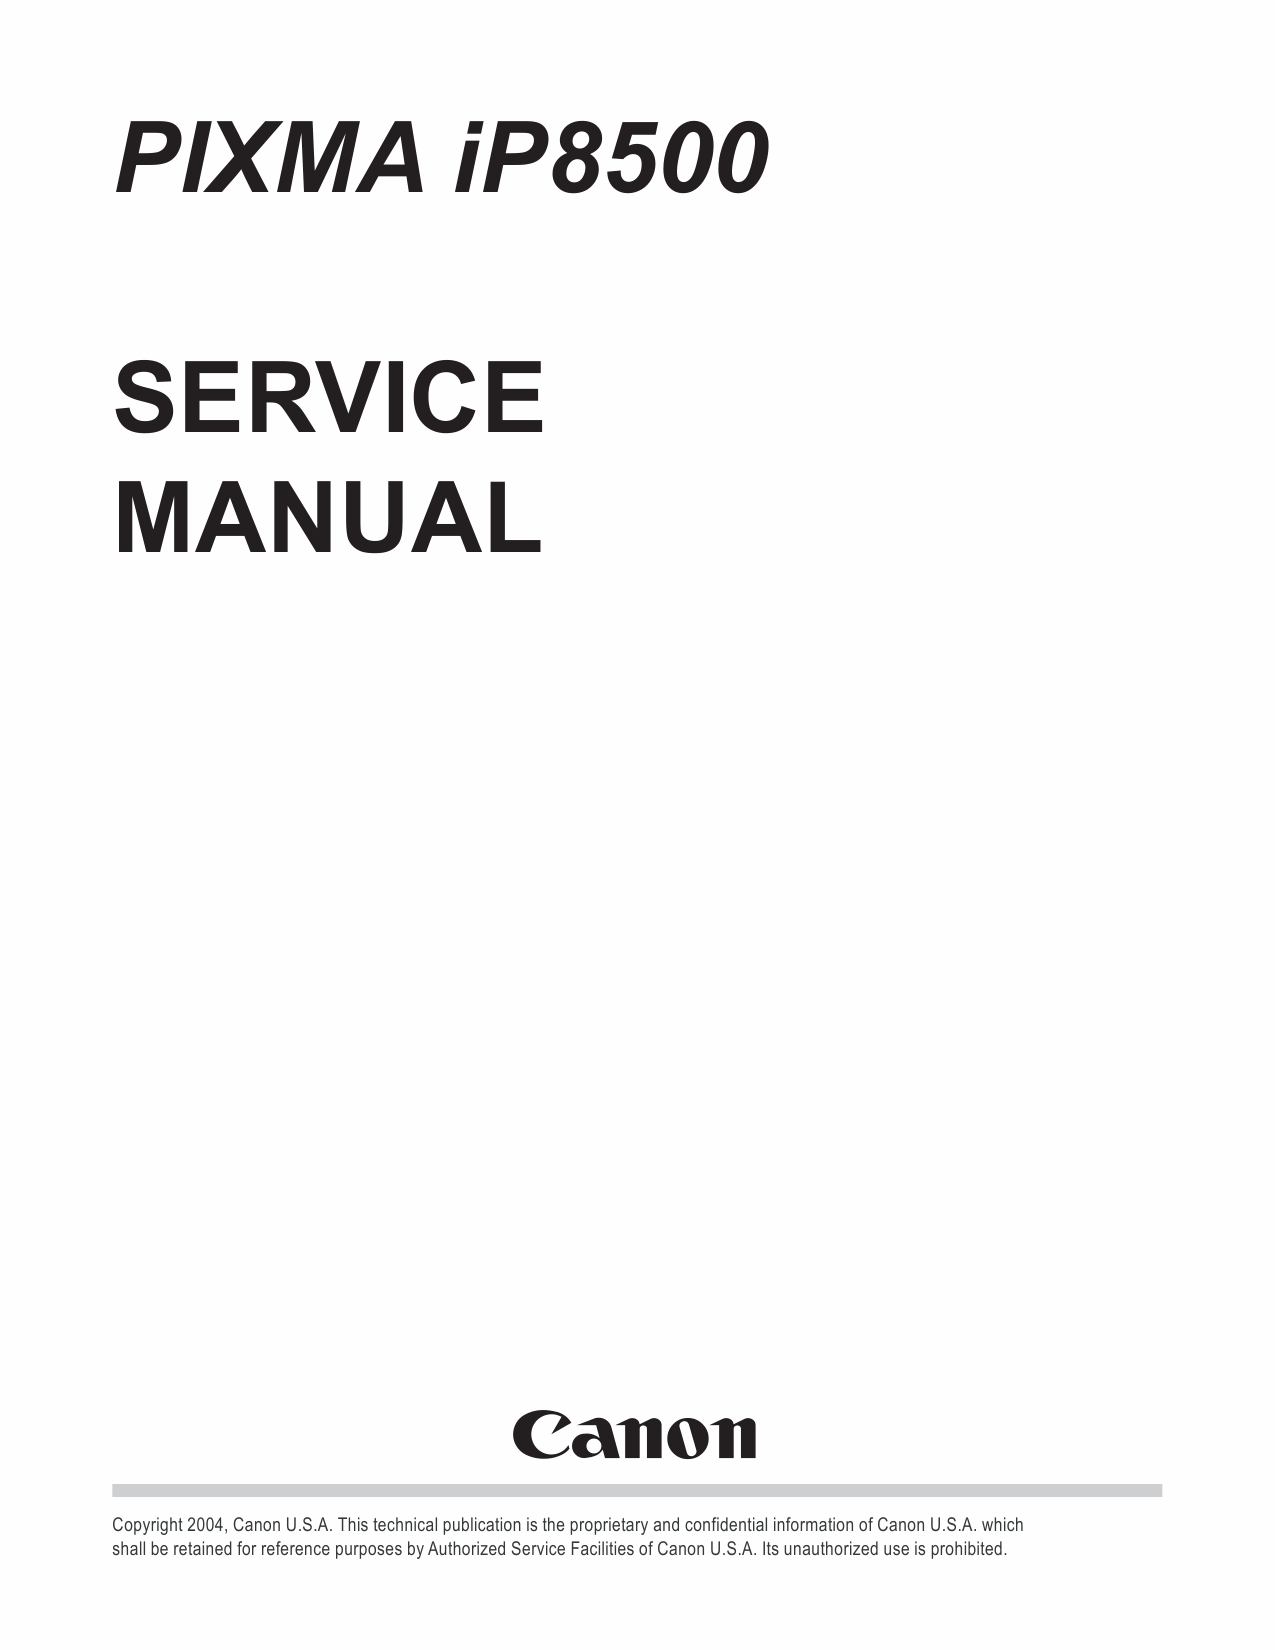 Canon PIXMA iP8500 Service Manual-1